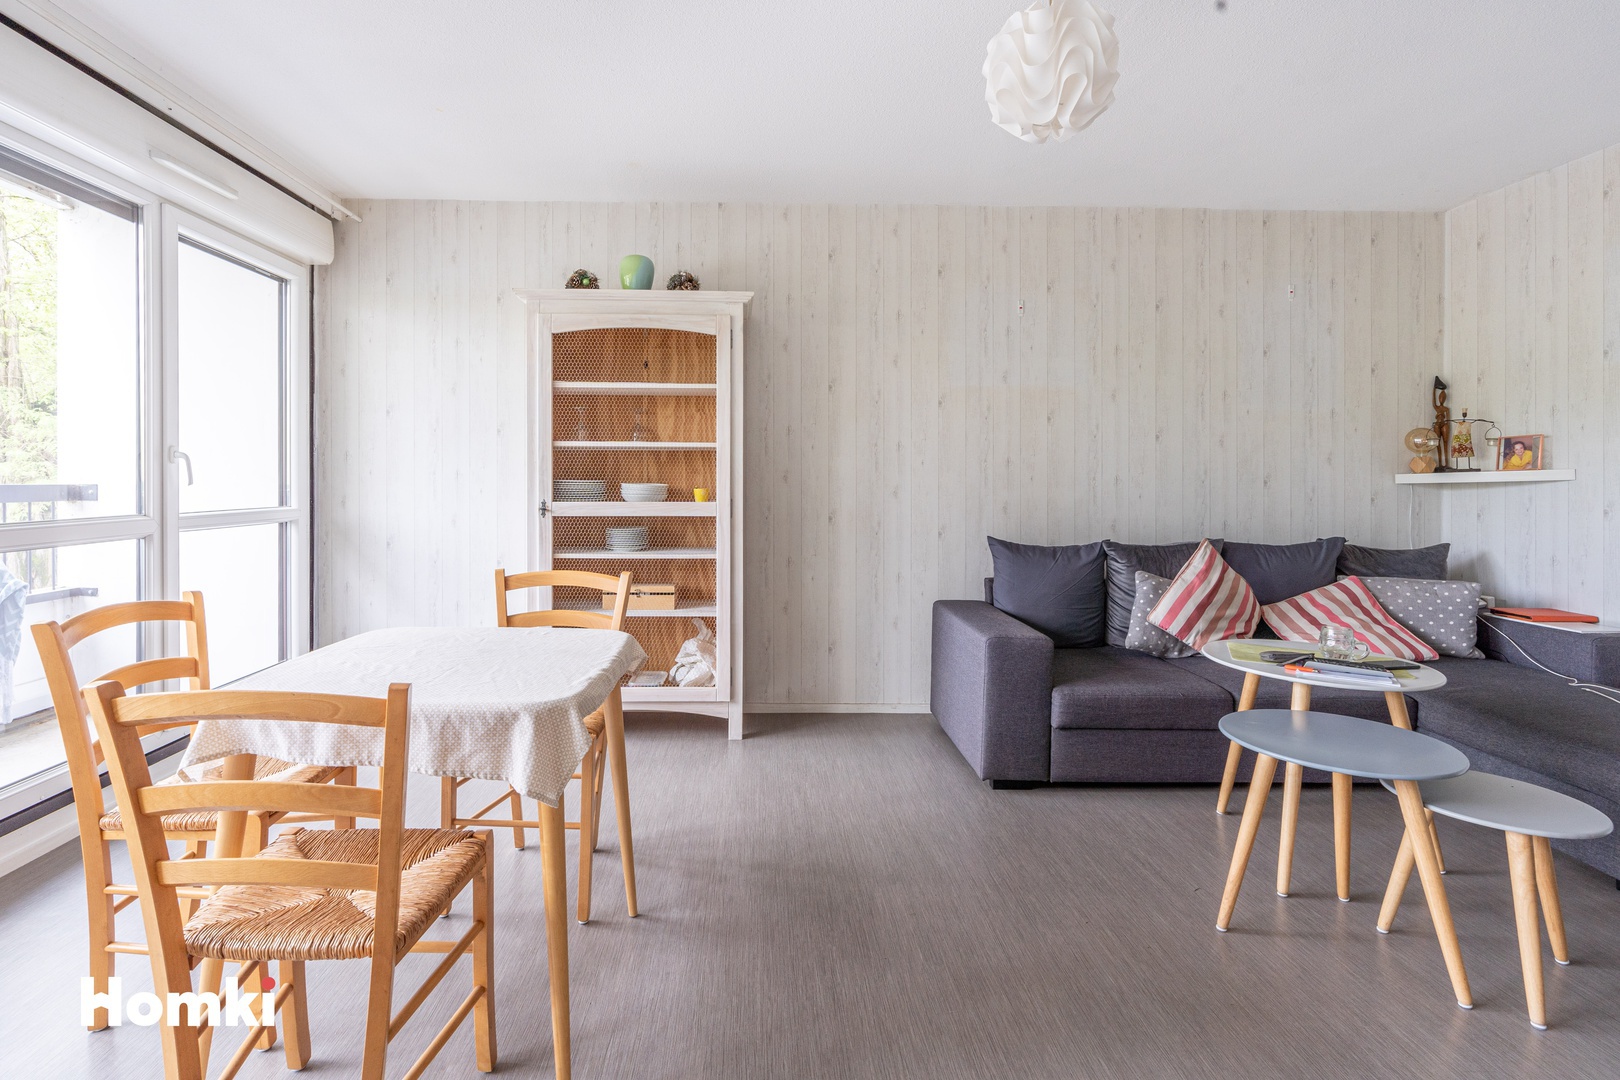 Homki - Vente Appartement  de 74.0 m² à Pessac 33600